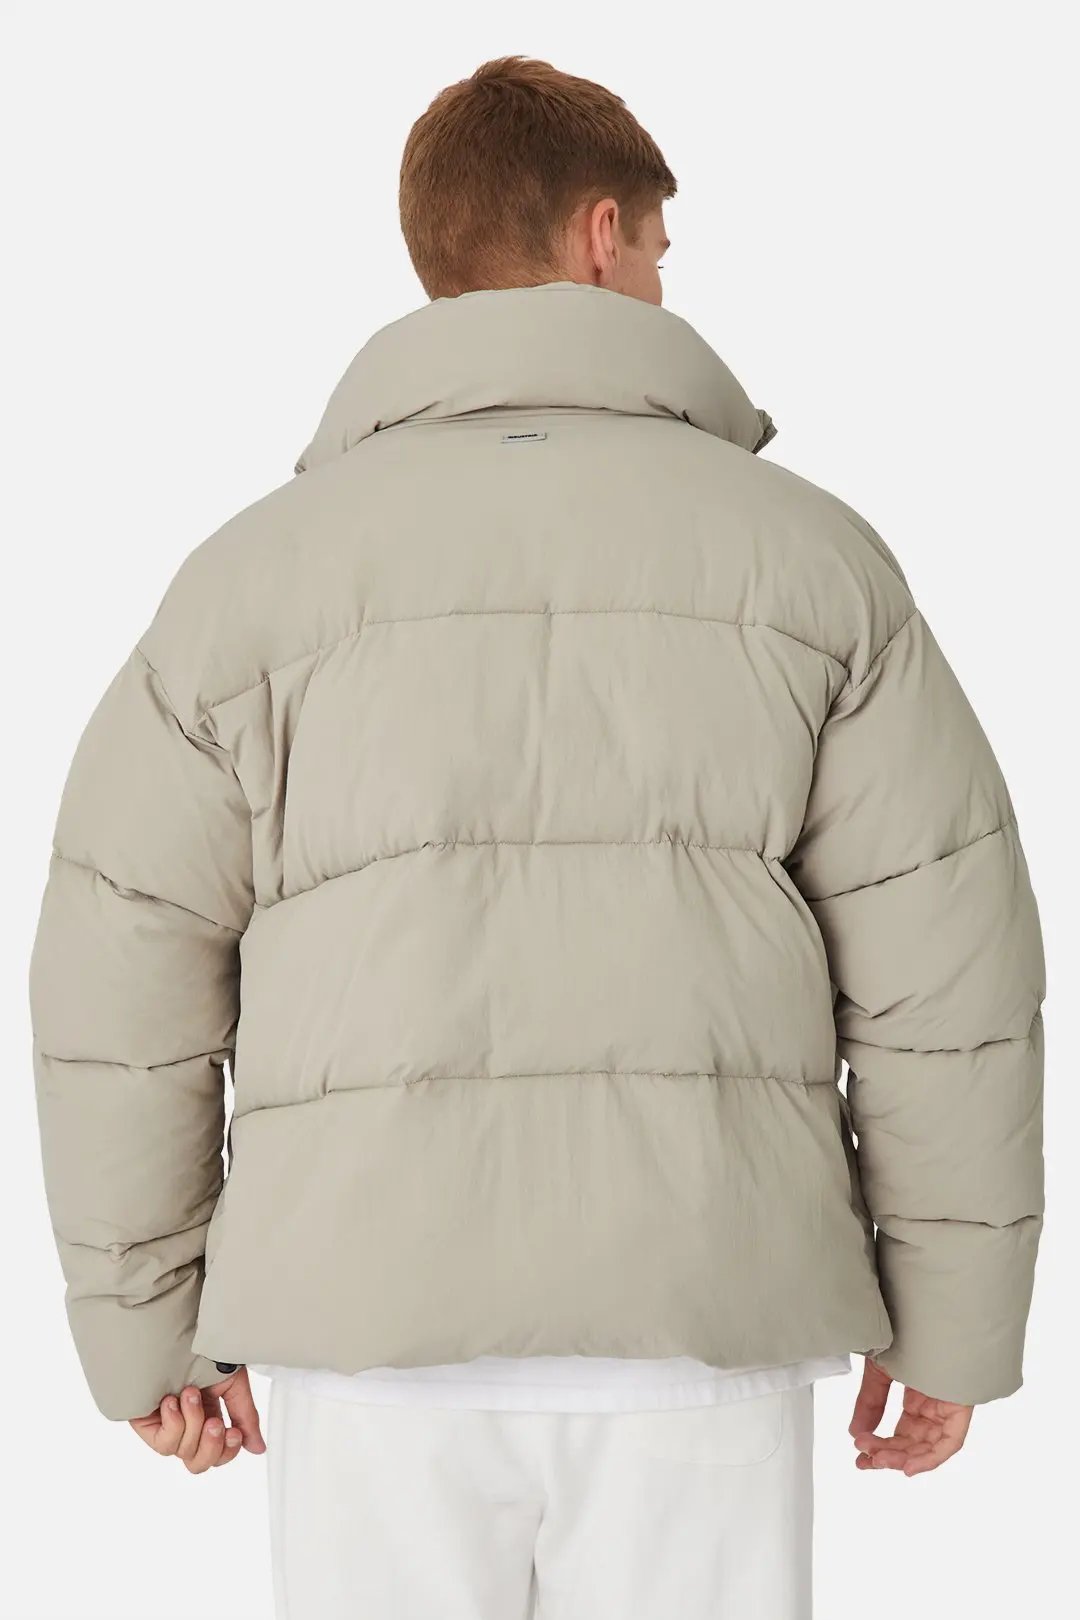 Custom Men's Winter Puffer Jacket - Buy Puffer Jacket,Men Puffer Jacket ...